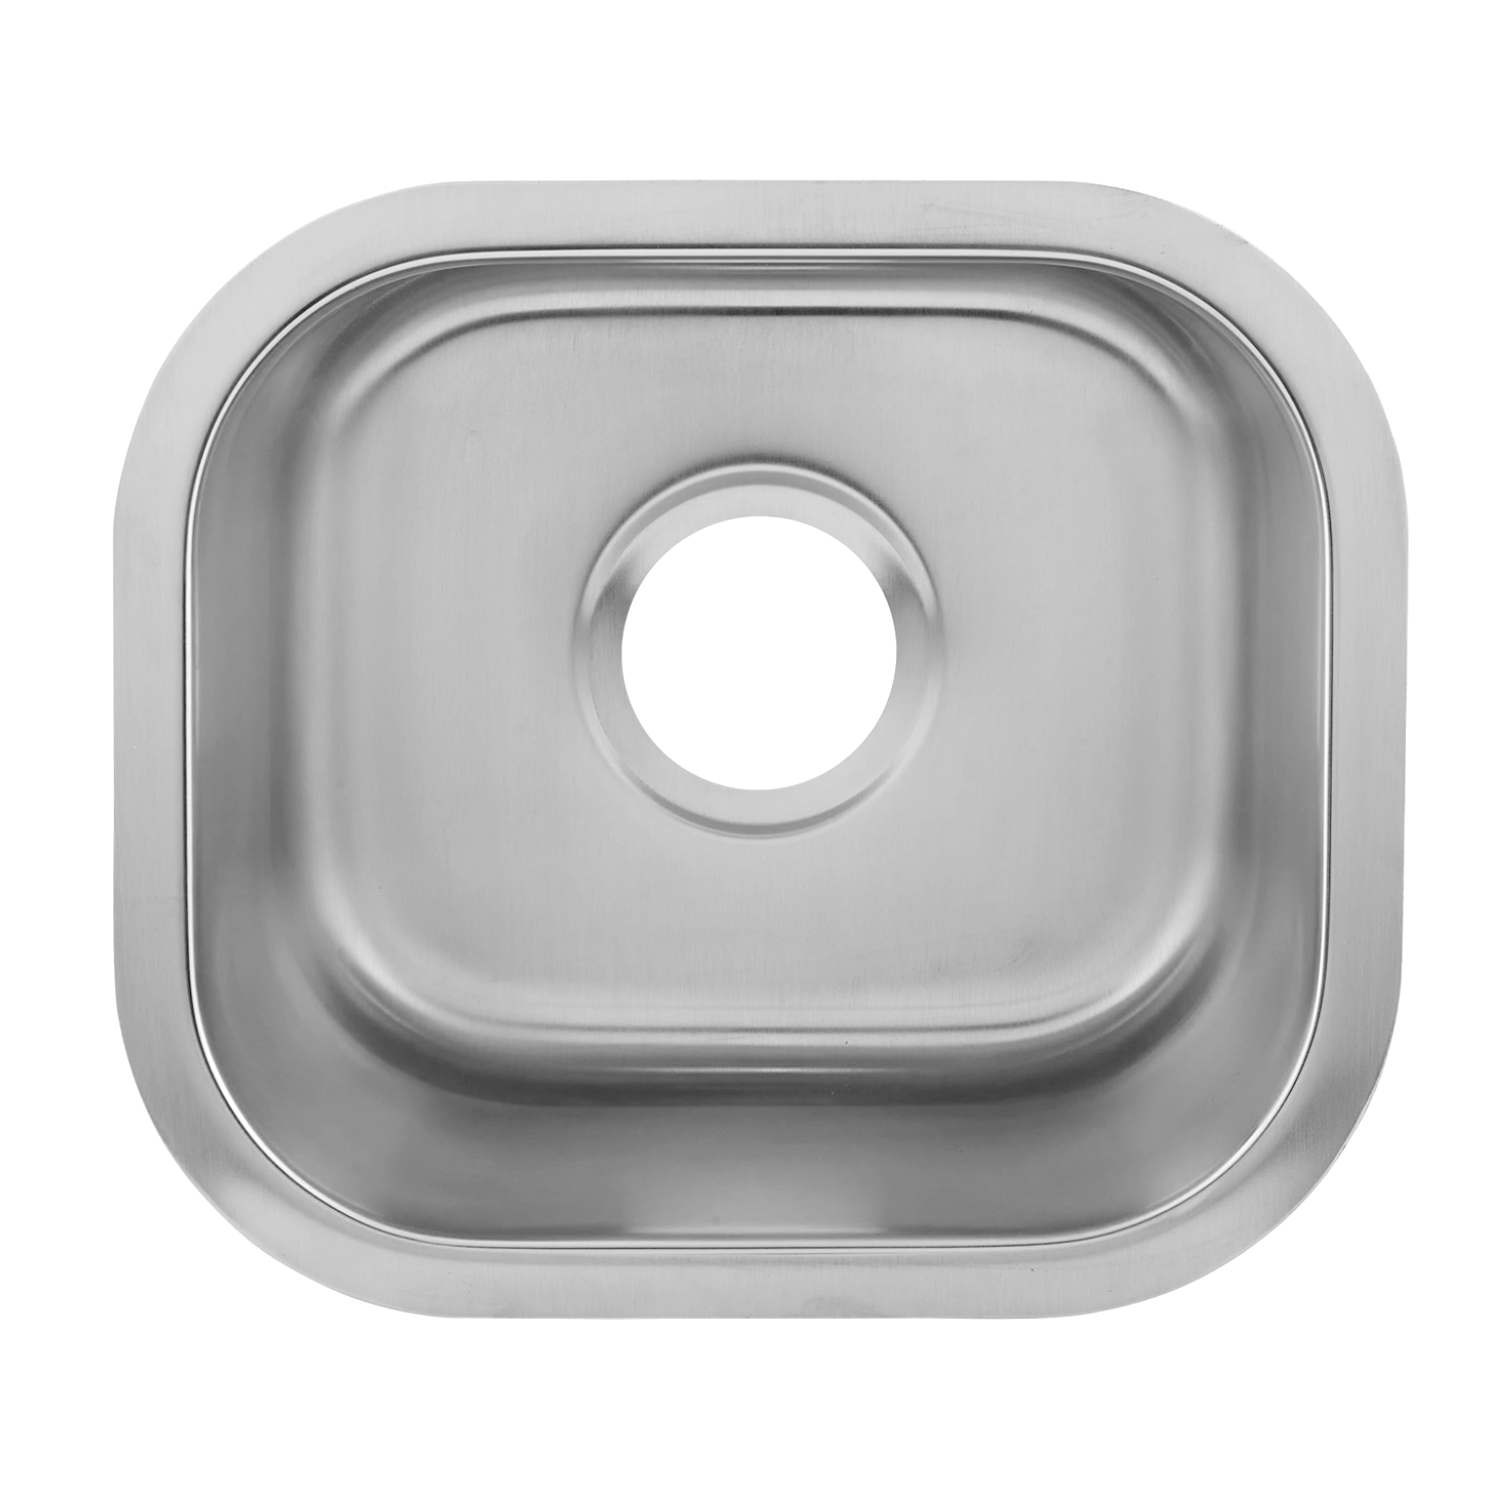 DAX Single Bowl Undermount Kitchen Sink, 18 Gauge Stainless Steel, Brushed Finish , 14-1/2 x 13 x 7 Inches (DAX-1214)